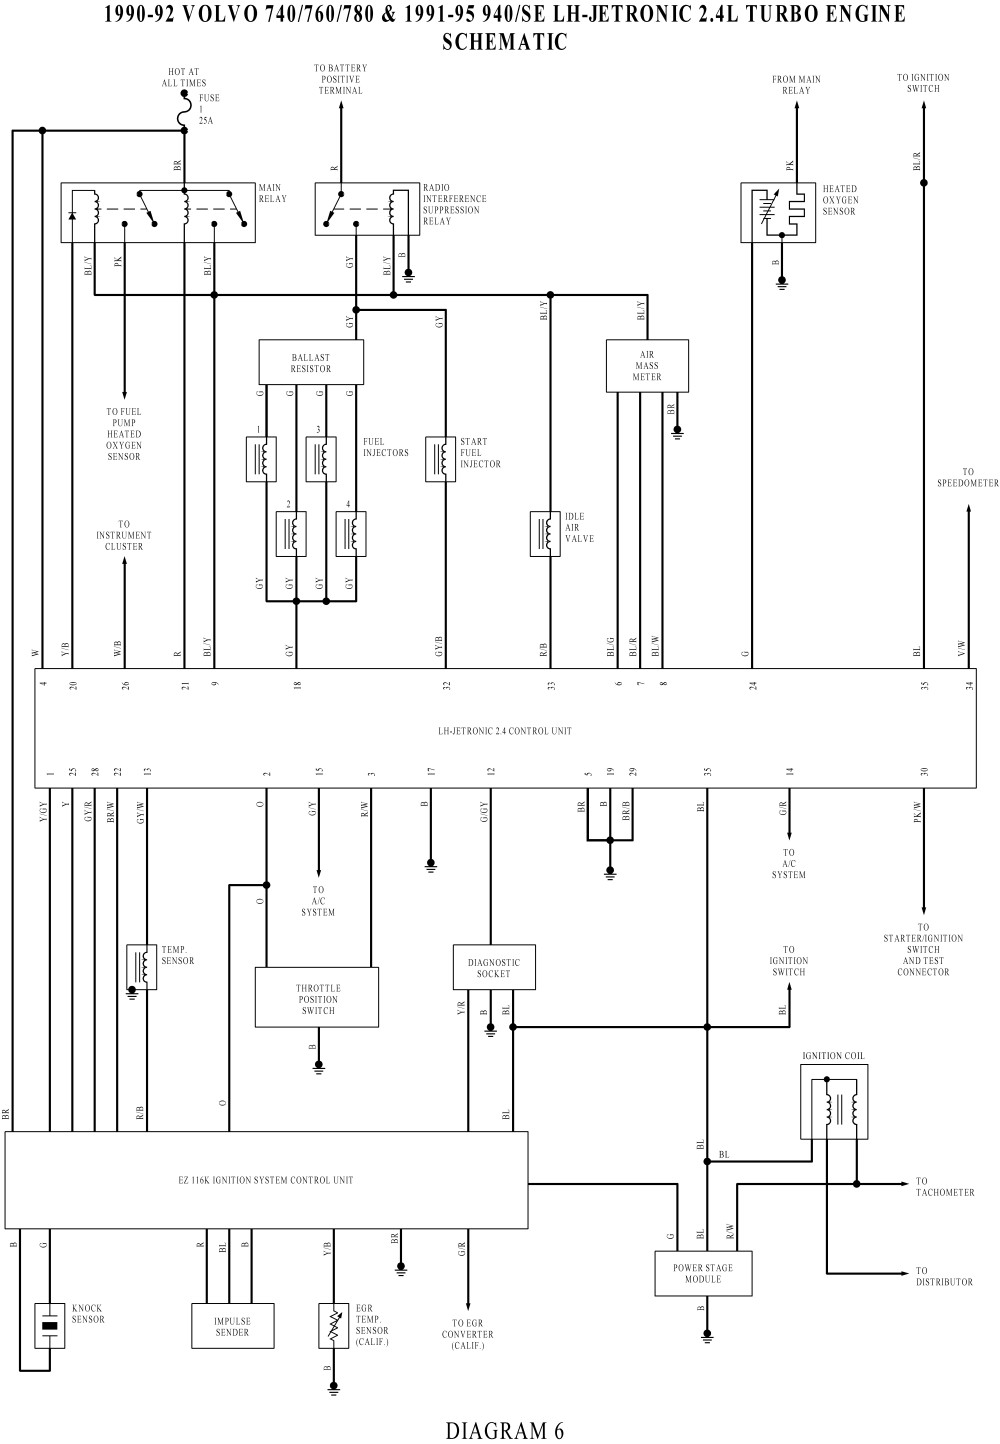 repair guides wiring diagrams wiring diagrams autozone rh autozone Diagram of Central Air Conditioner